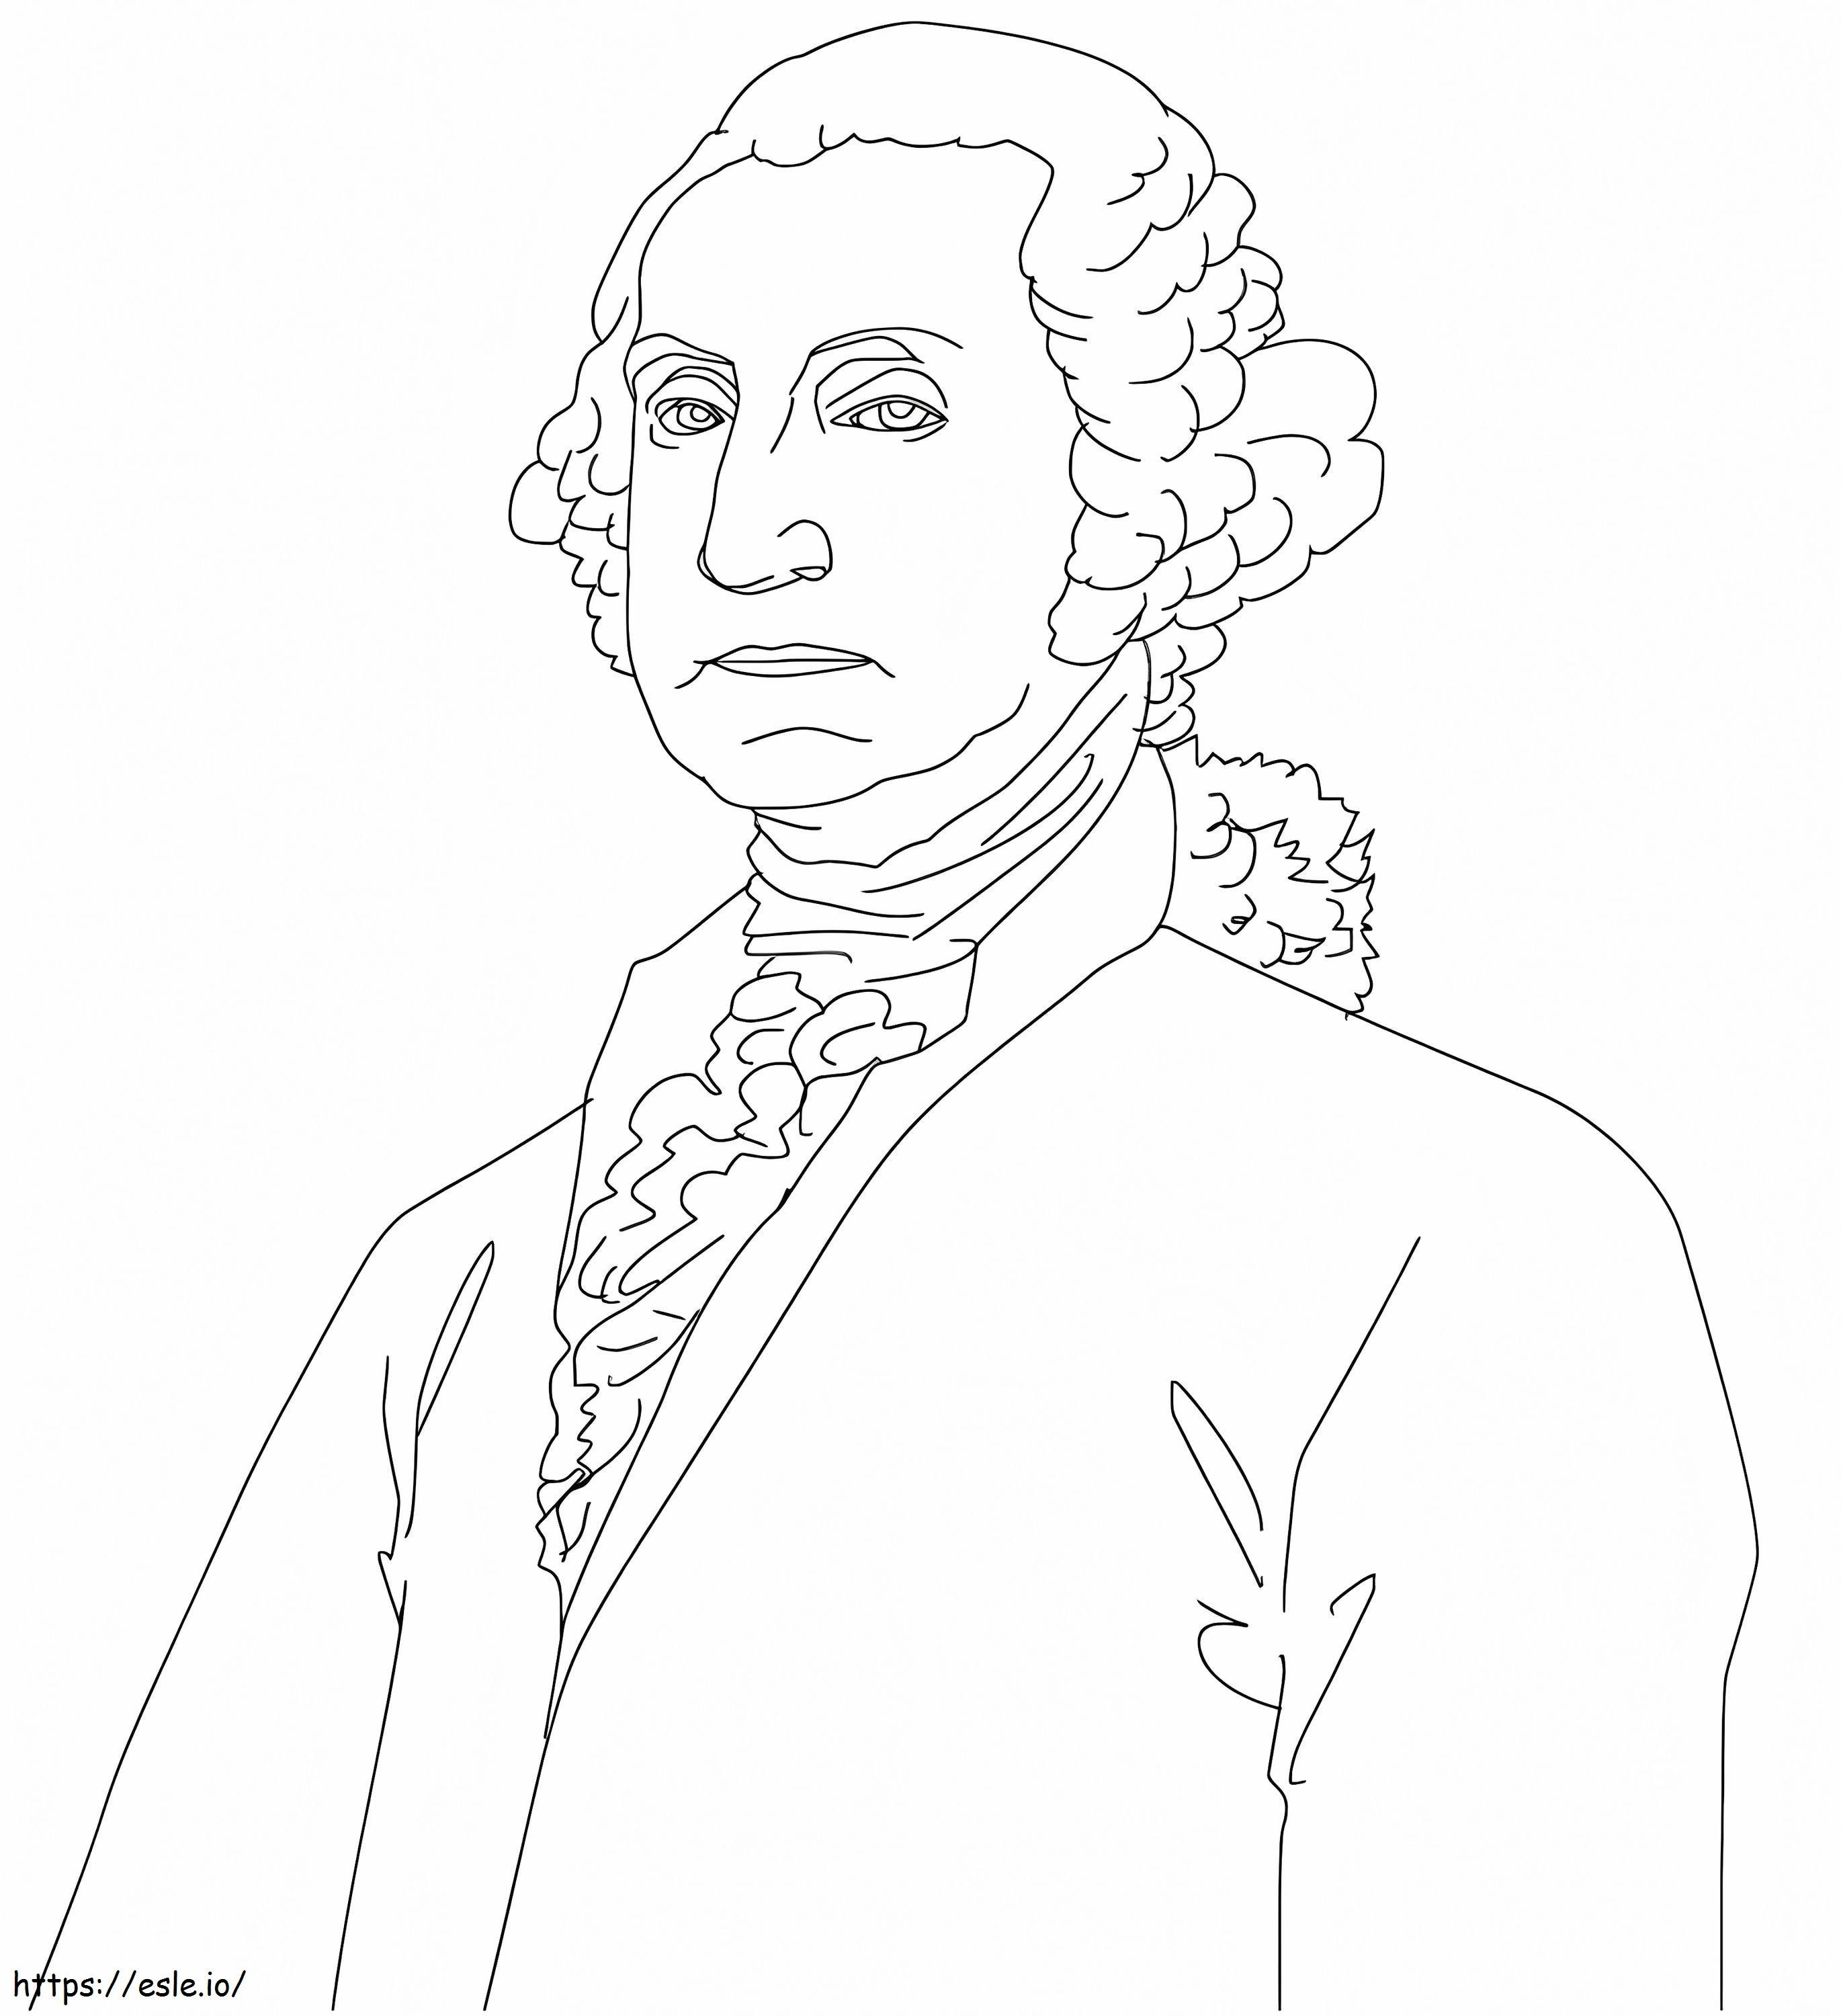 George Washington 8 coloring page